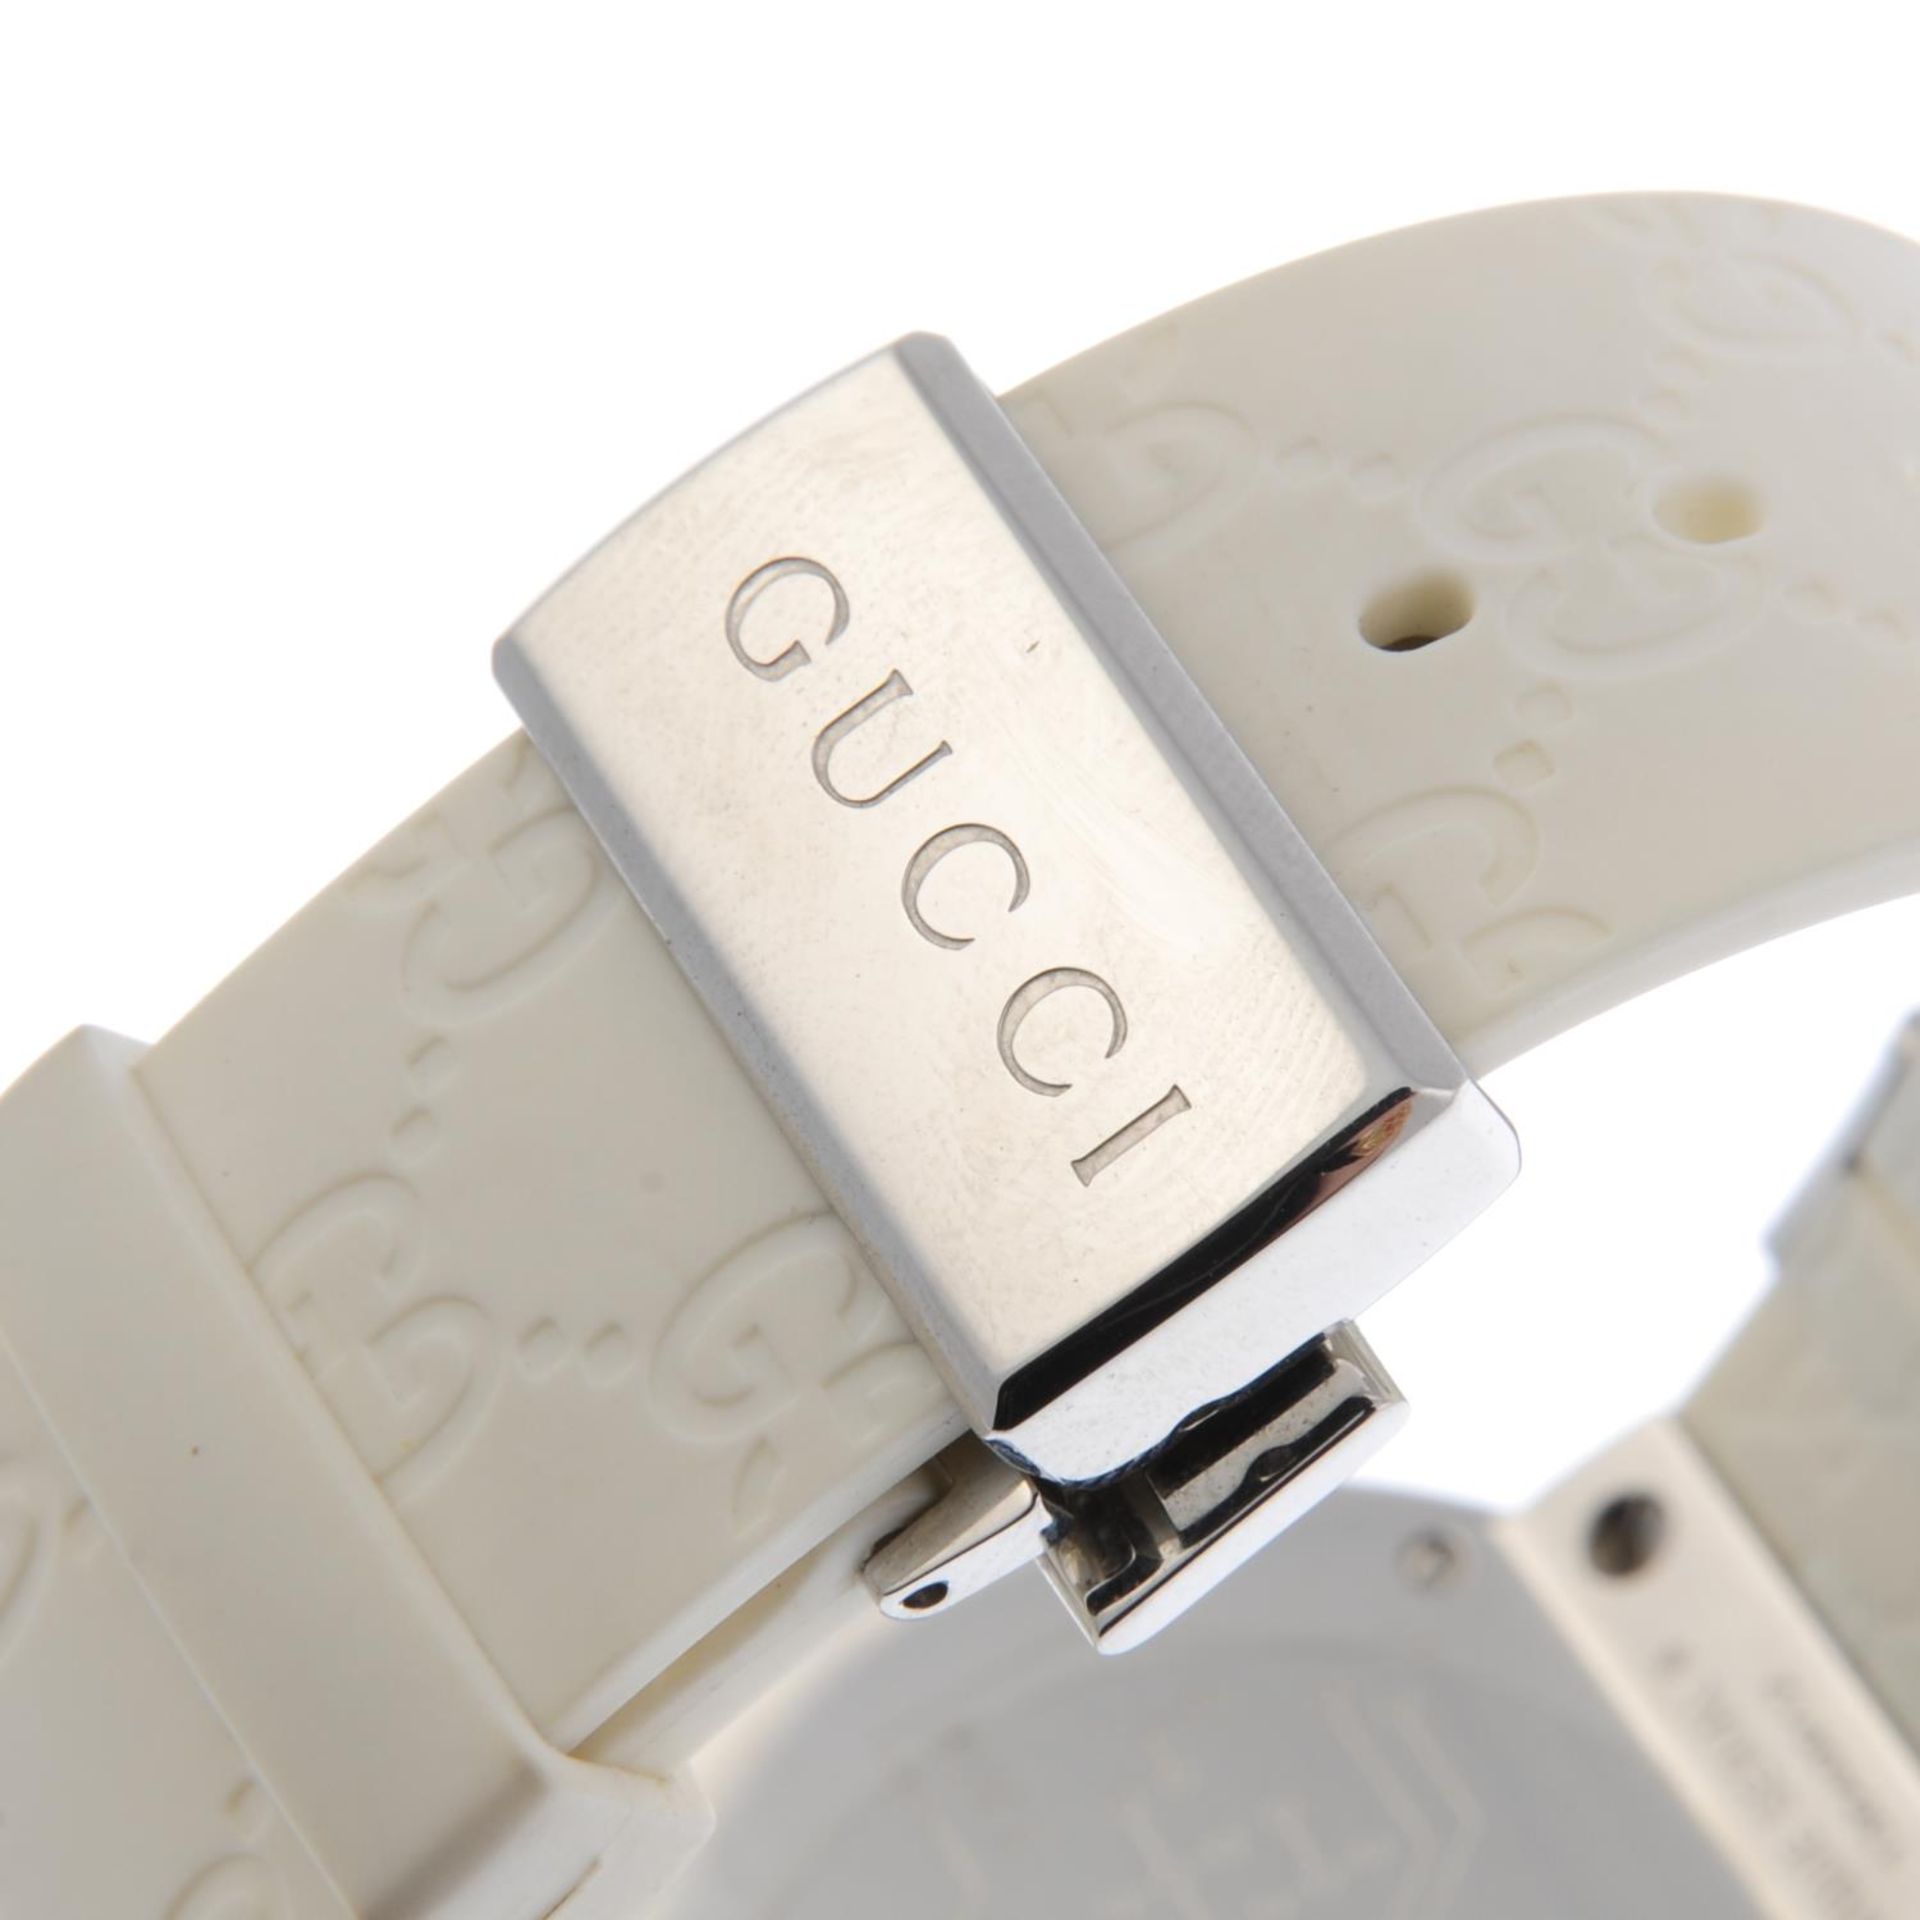 GUCCI - a gentleman's I-Gucci wrist watch. - Image 2 of 5